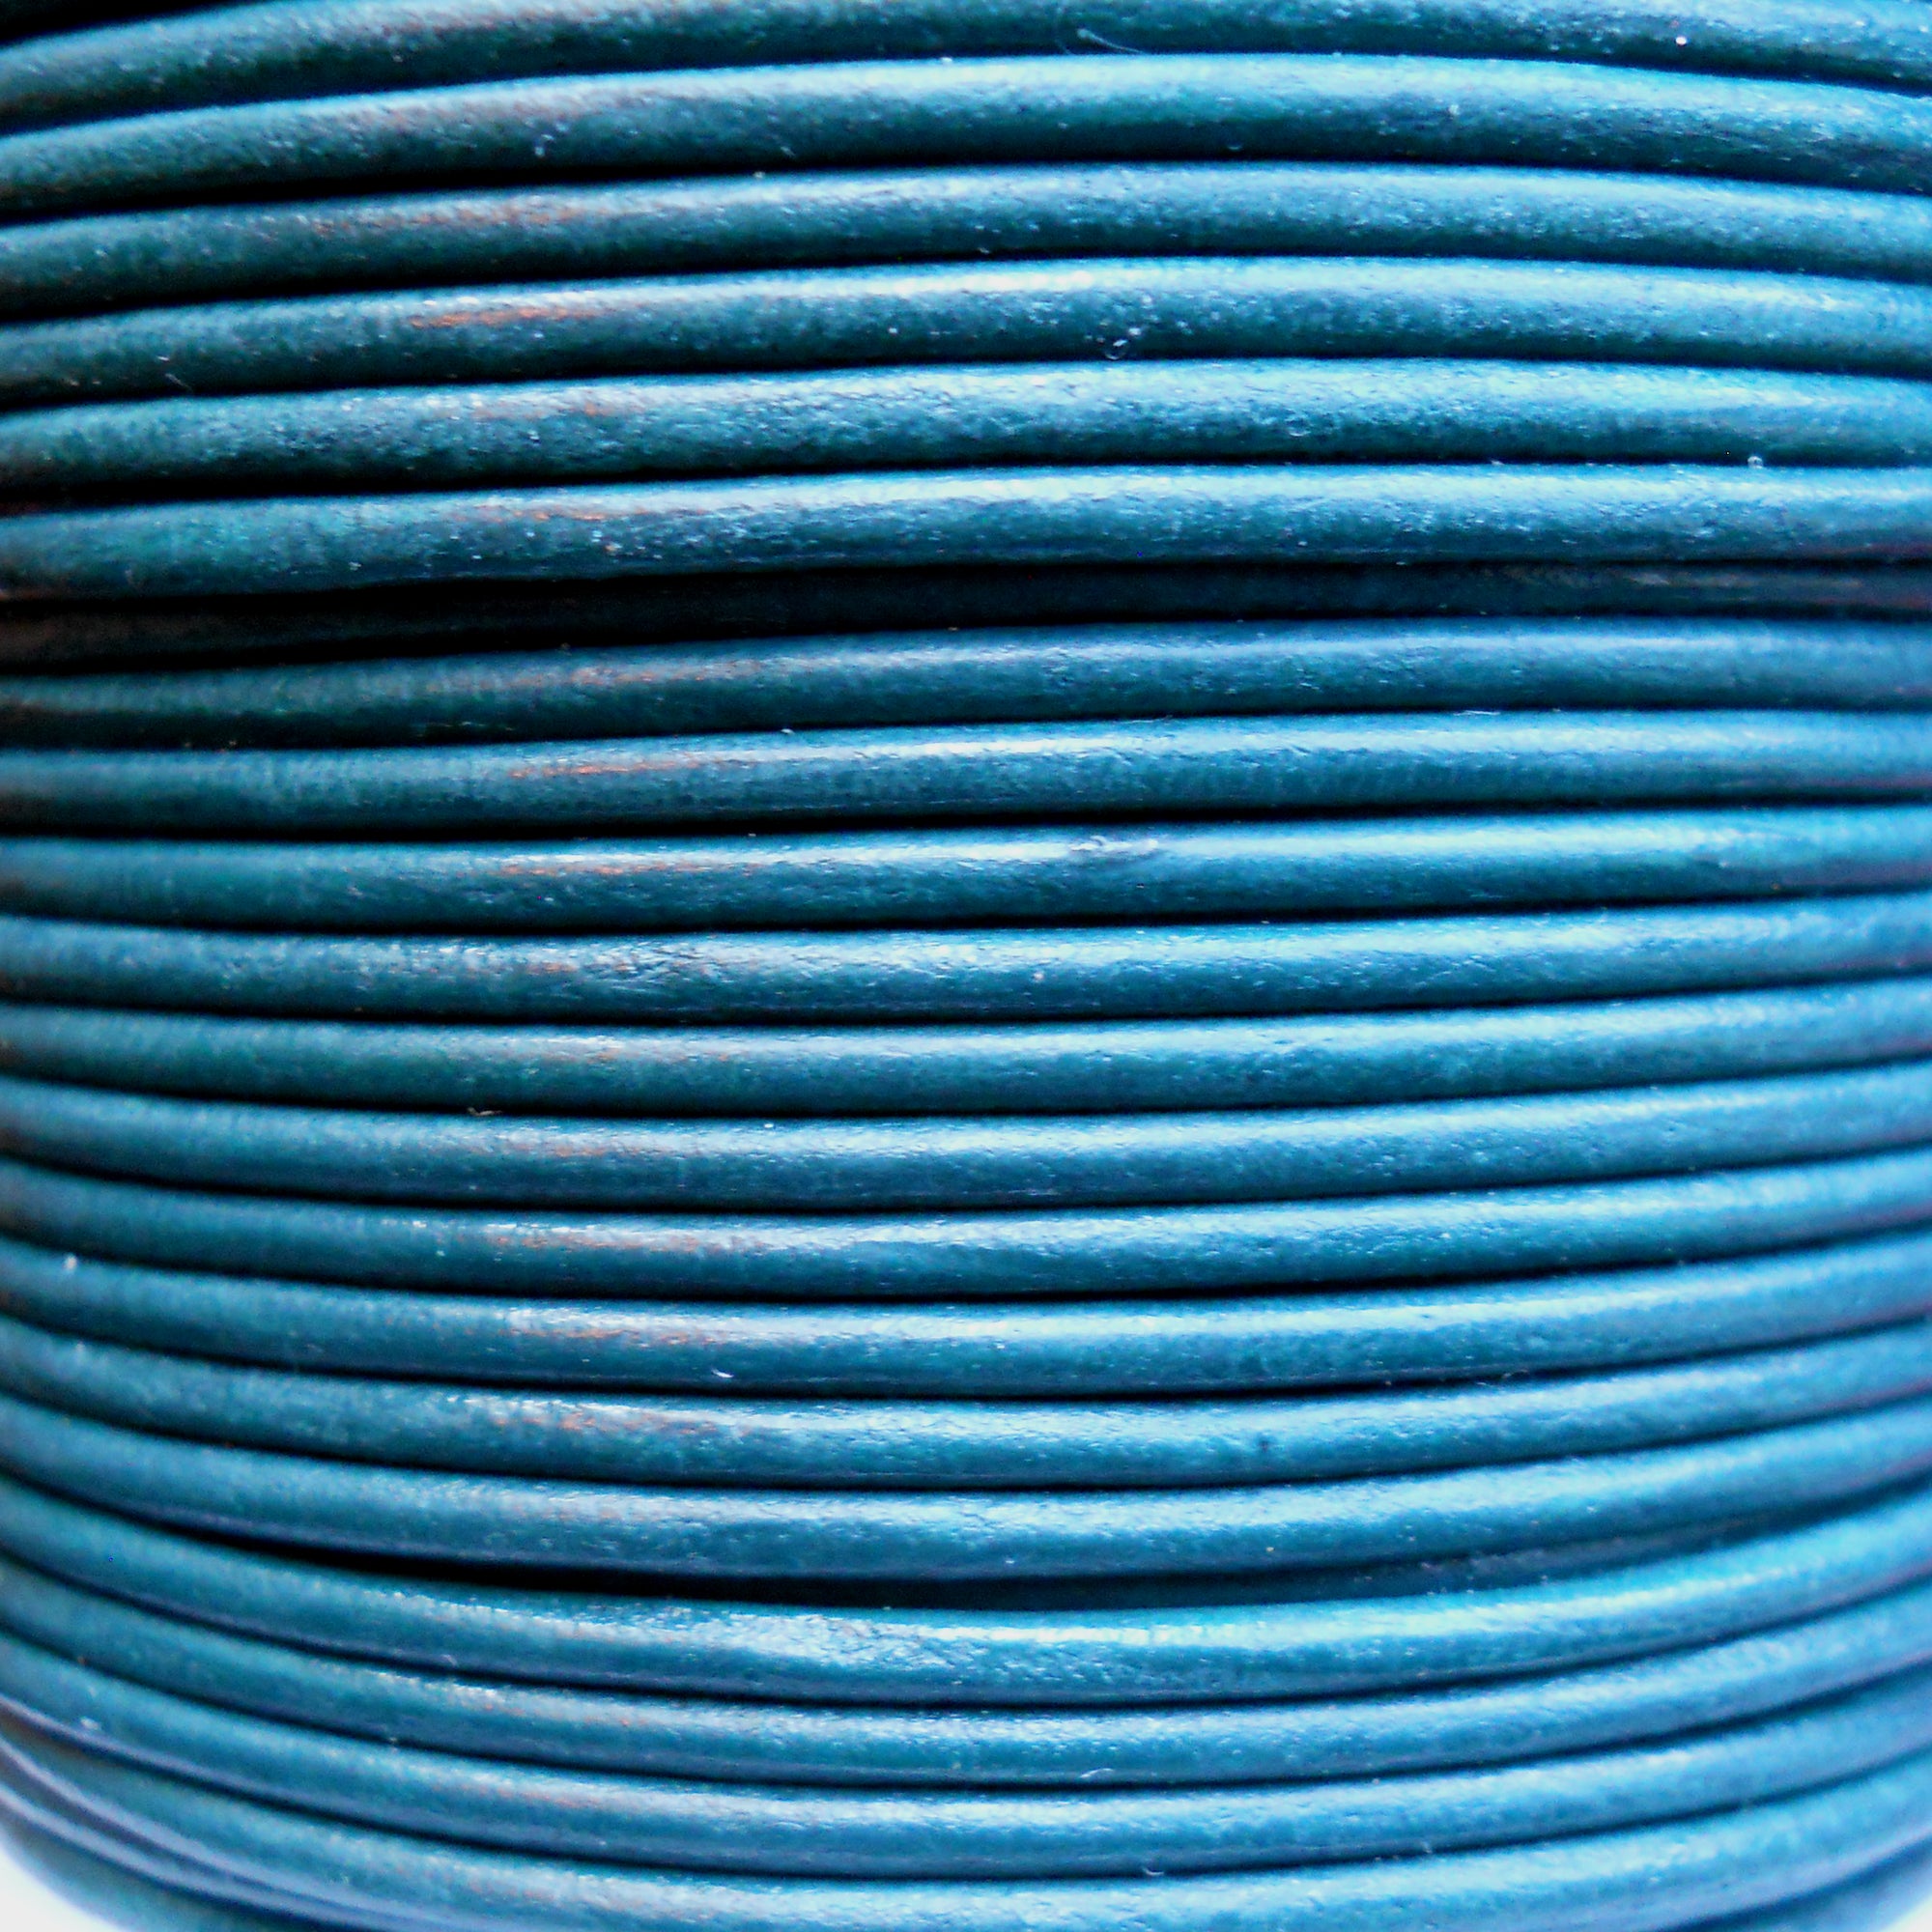 Bermuda blue 2 mm plain round leather